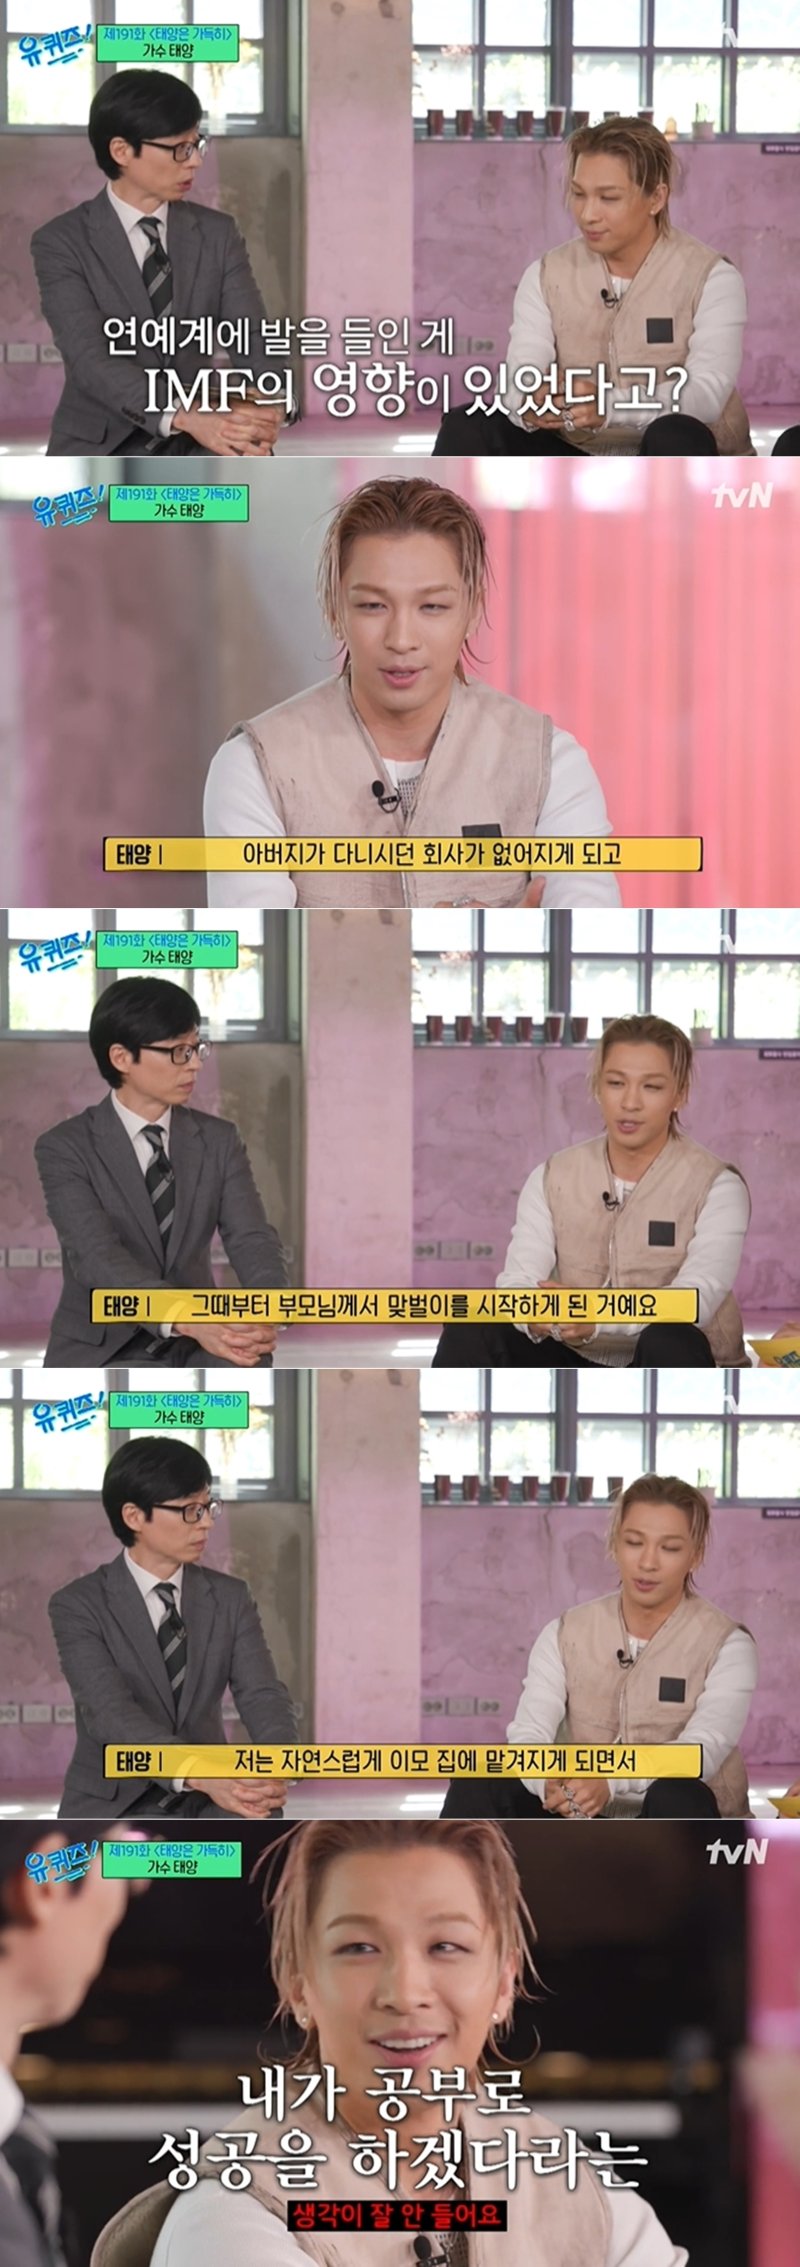 tvN 예능 프로그램 '유 퀴즈 온 더 블럭' 방송 화면 갈무리